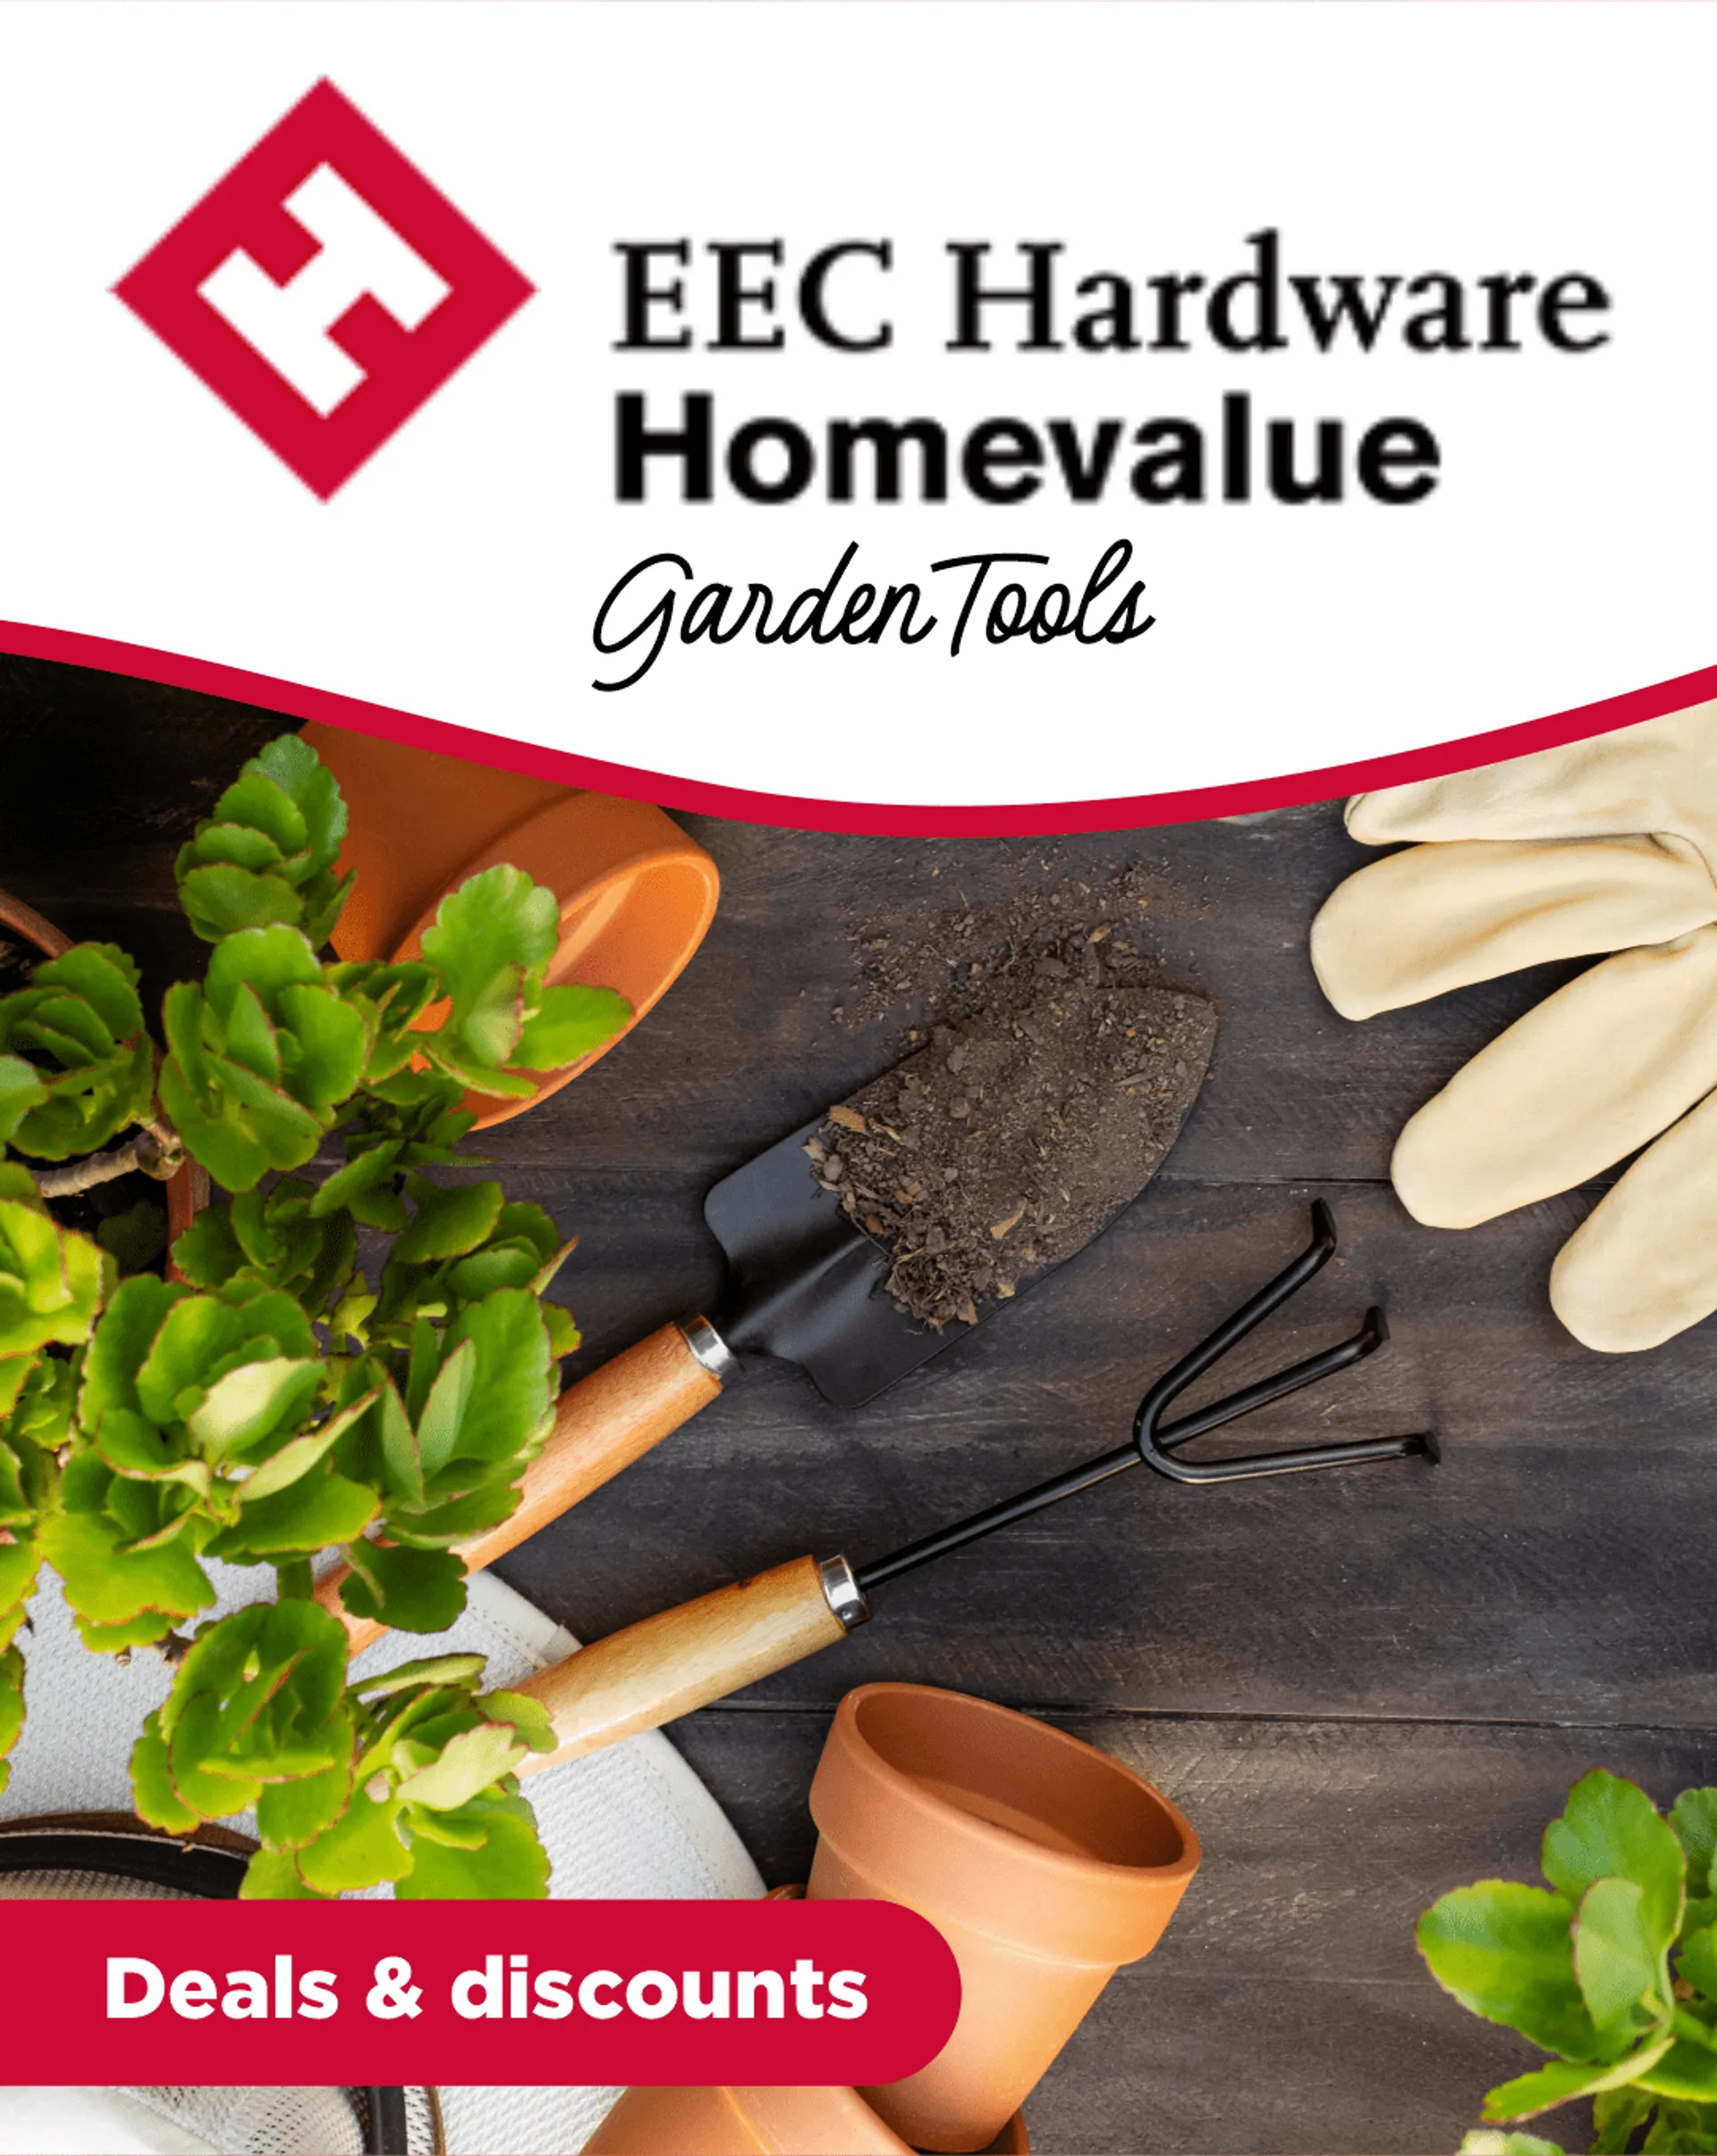 EEC Hardware - DIY & Hardware GardenTools